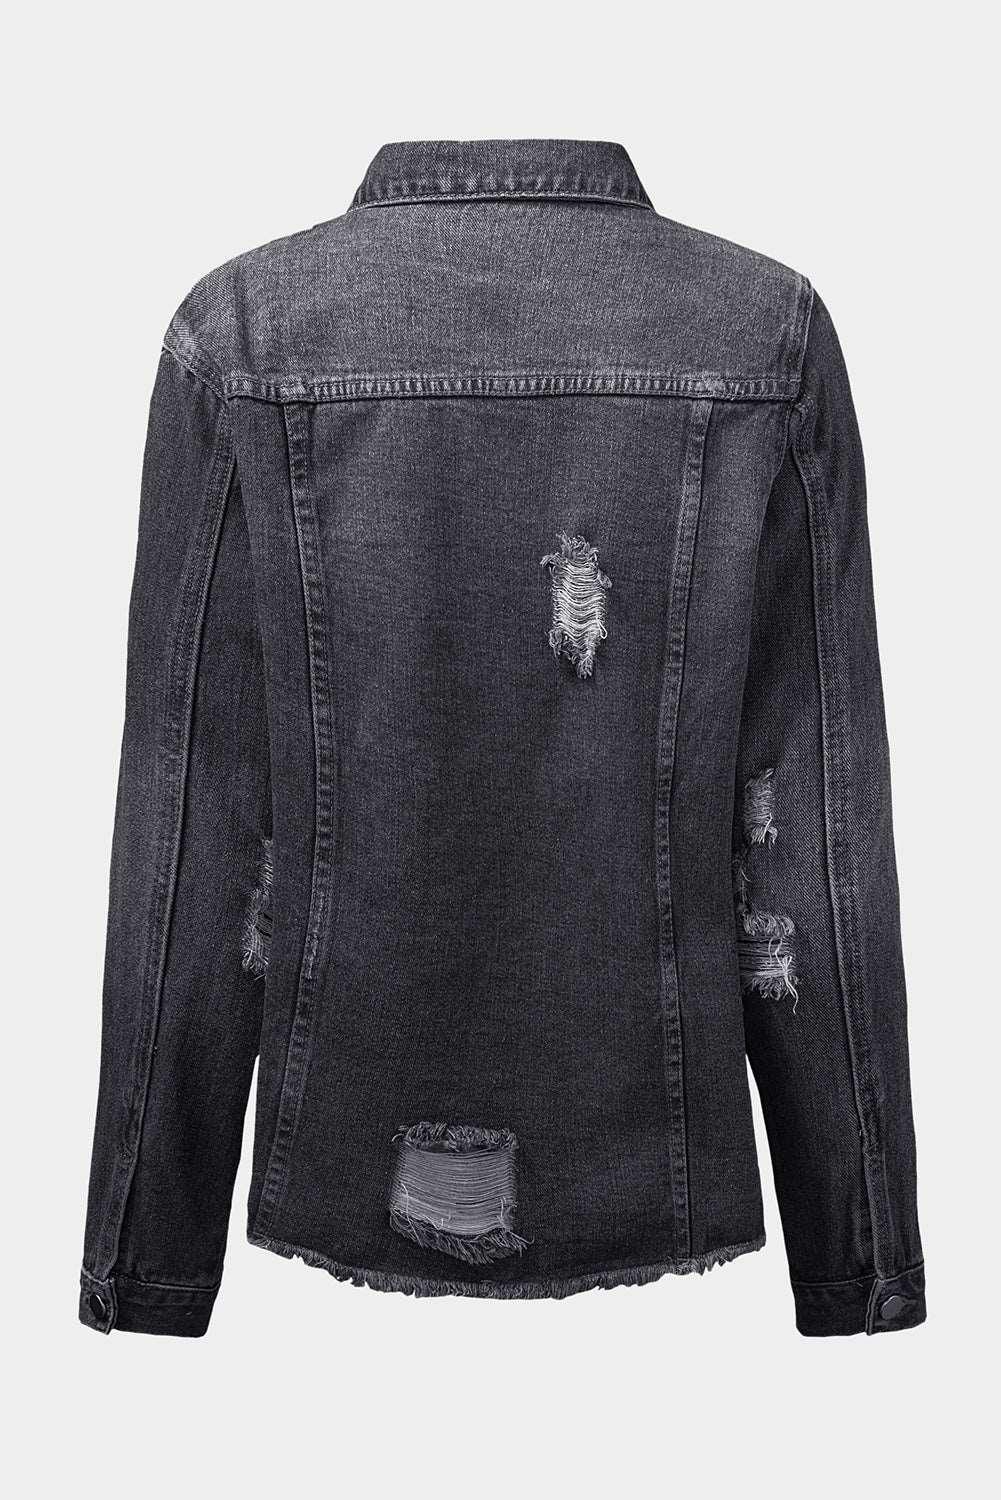 Black Casual Distressed Raw Hem Buttons Denim Jacket - Vesteeto